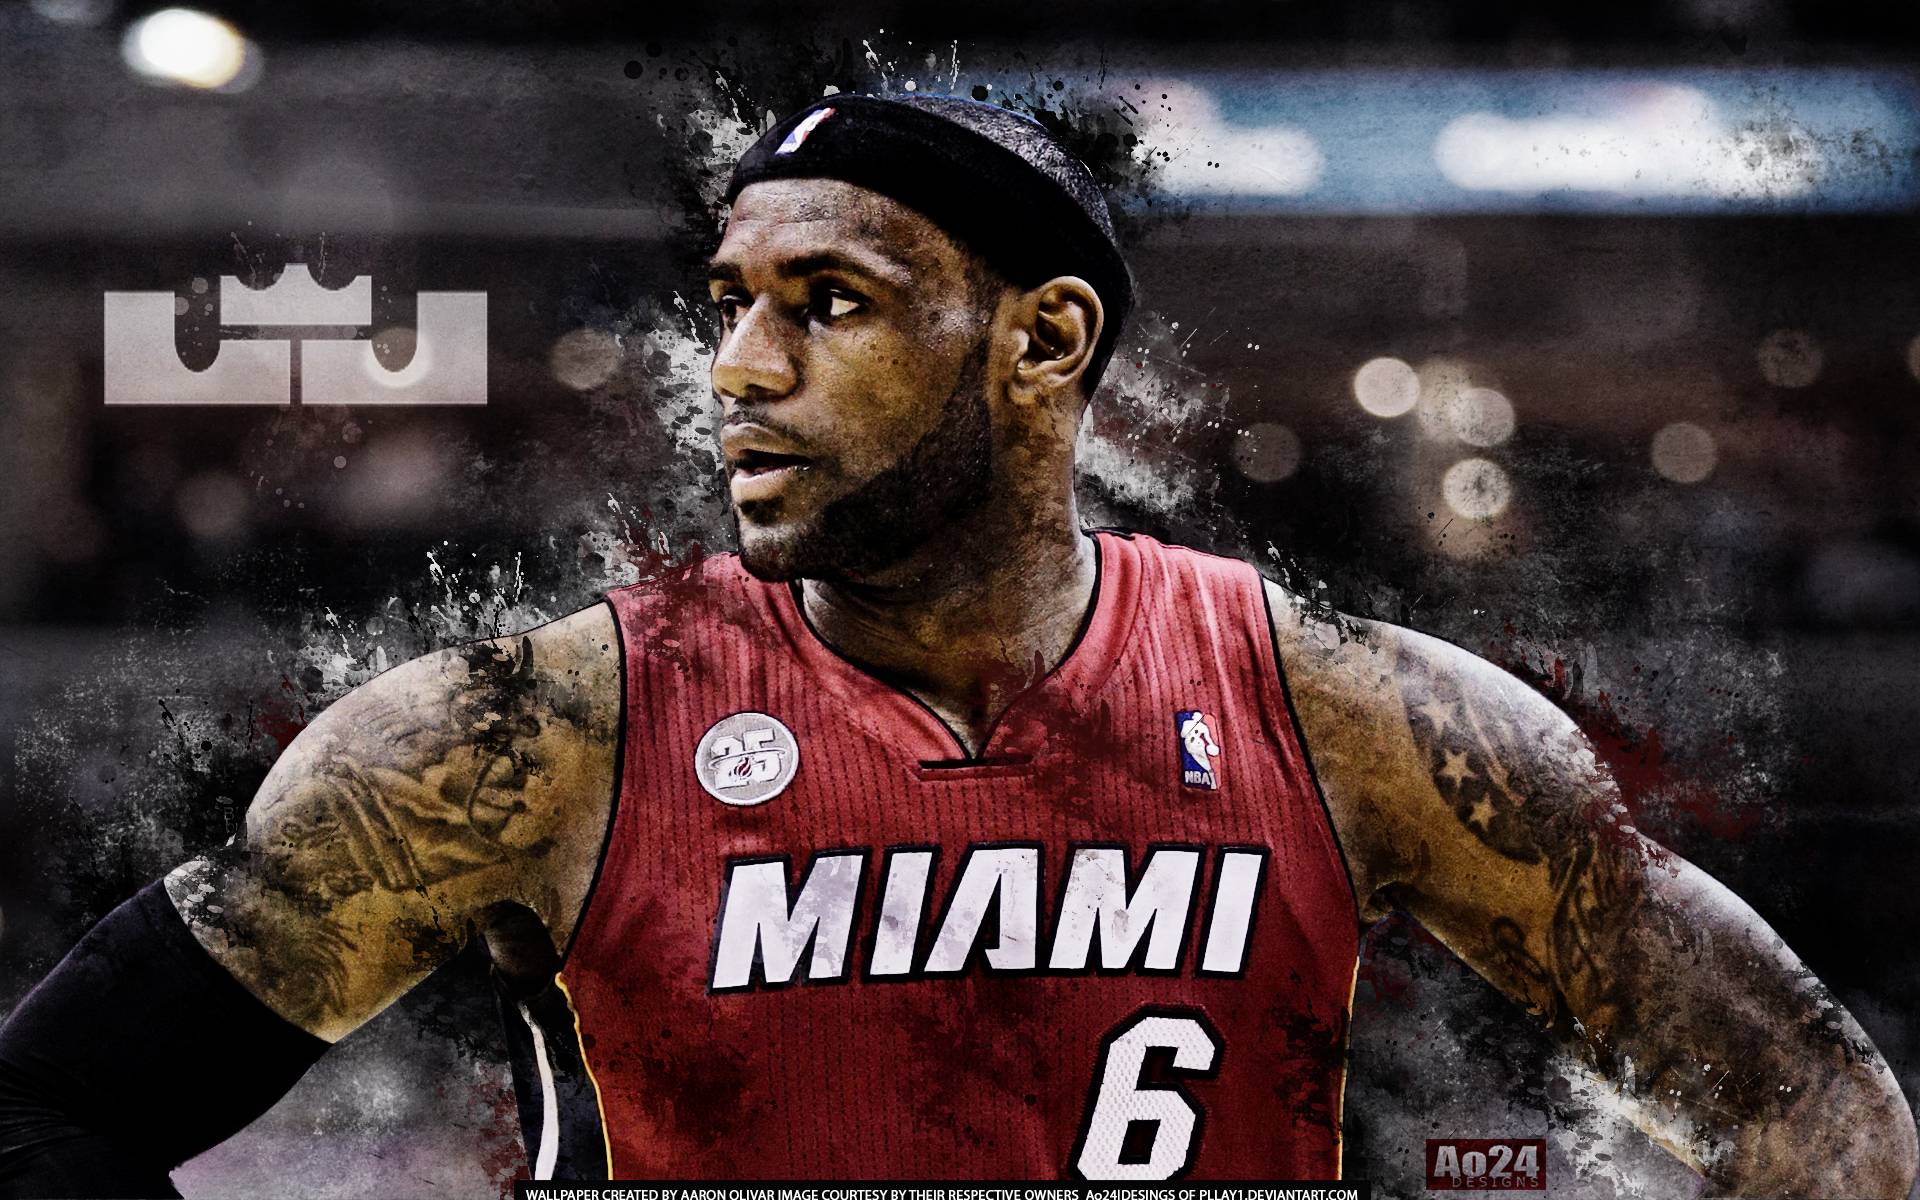 Miami Heat LeBron James Basketball Wallpaper. TanukinoSippo